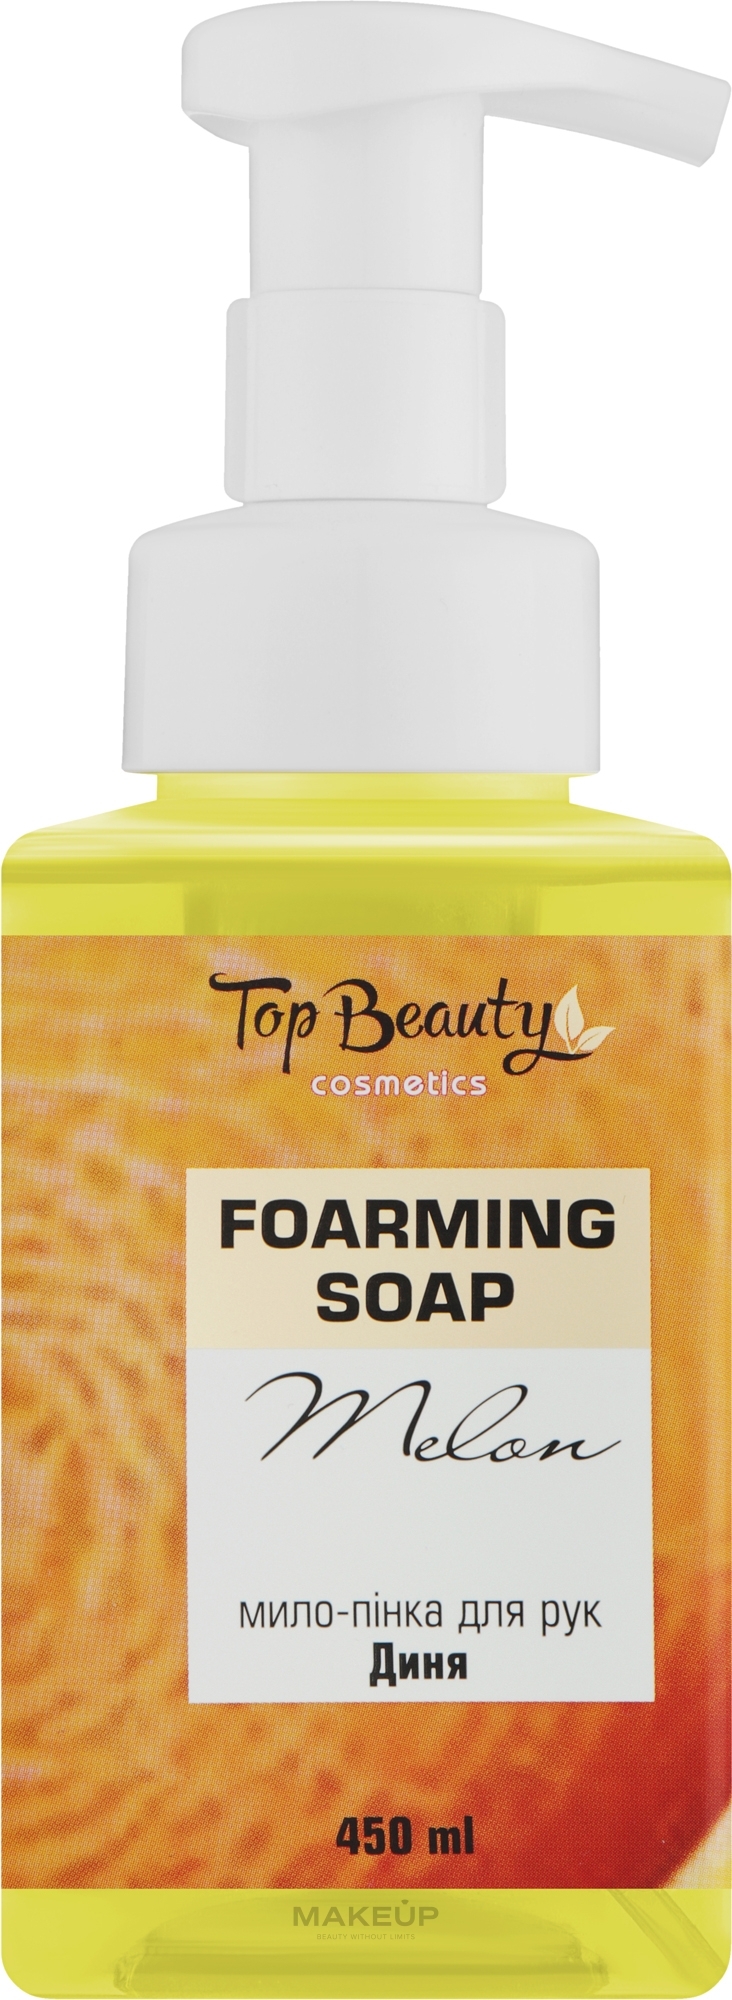 Мило-пінка для рук "Диня" - Top Beauty Foaming Soap  — фото 450ml